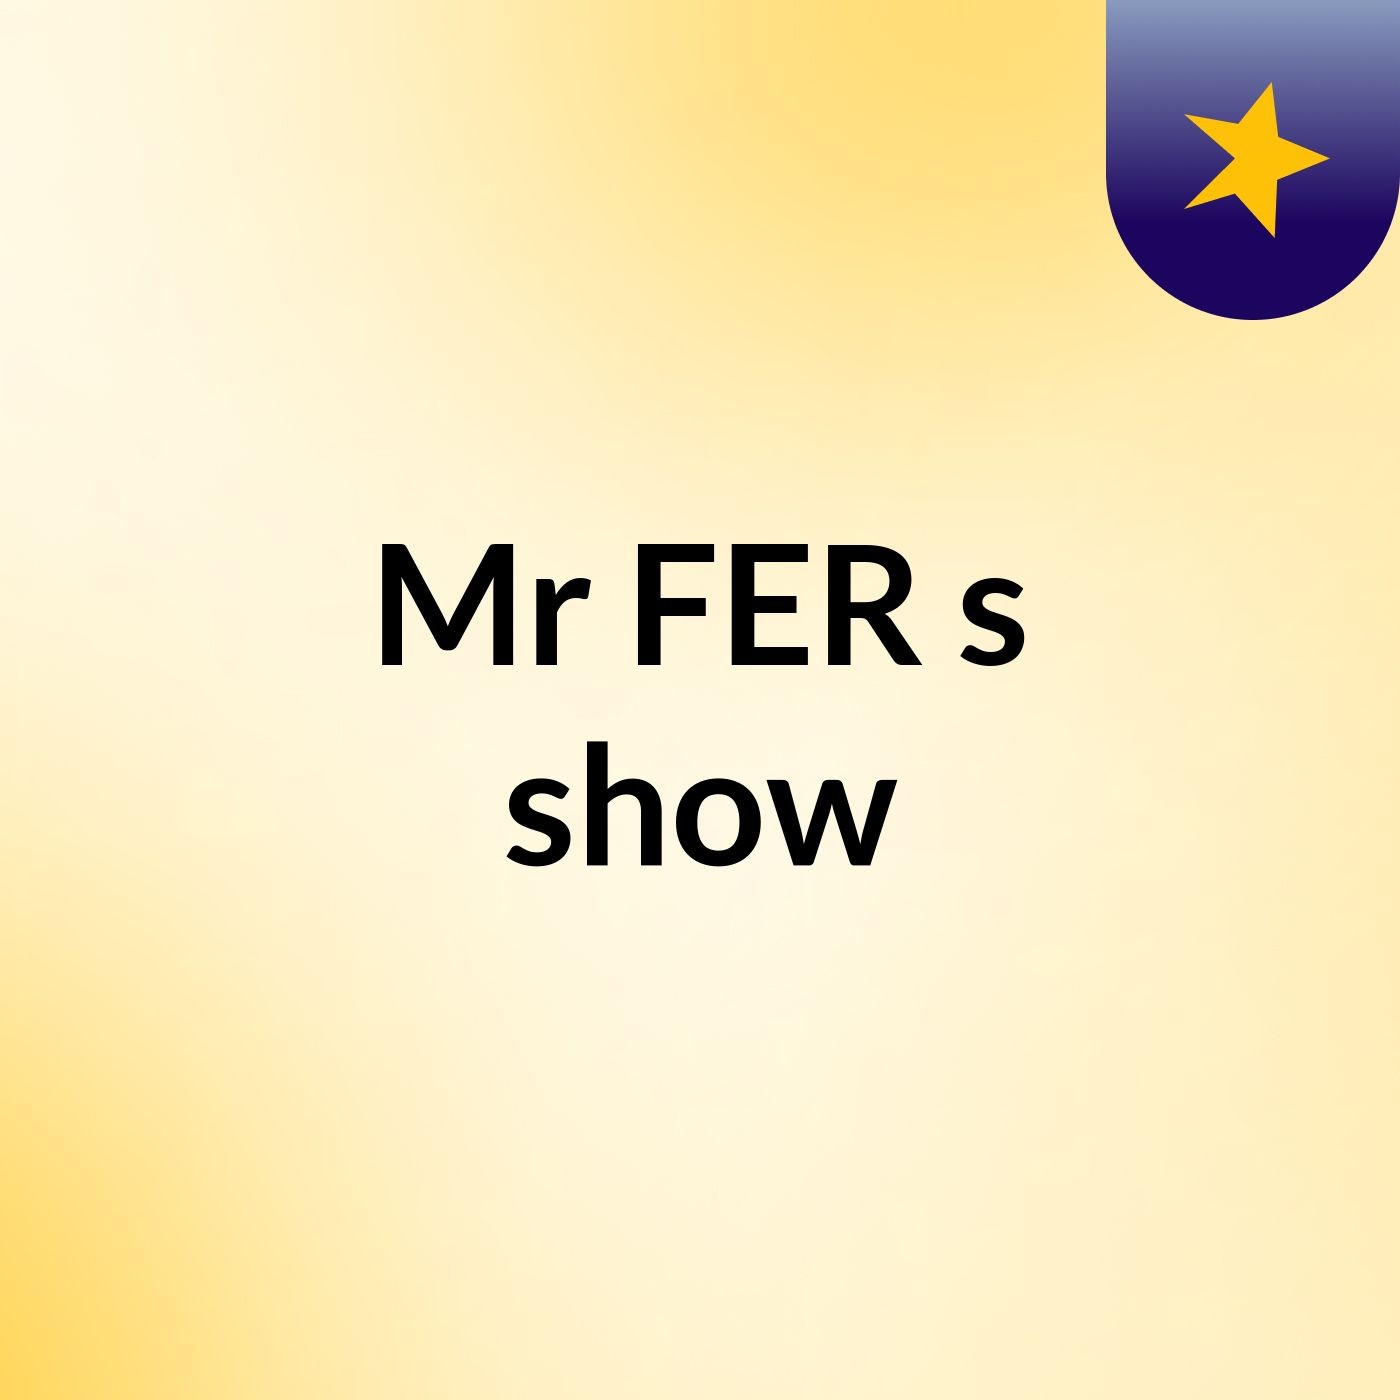 Mr FER's show